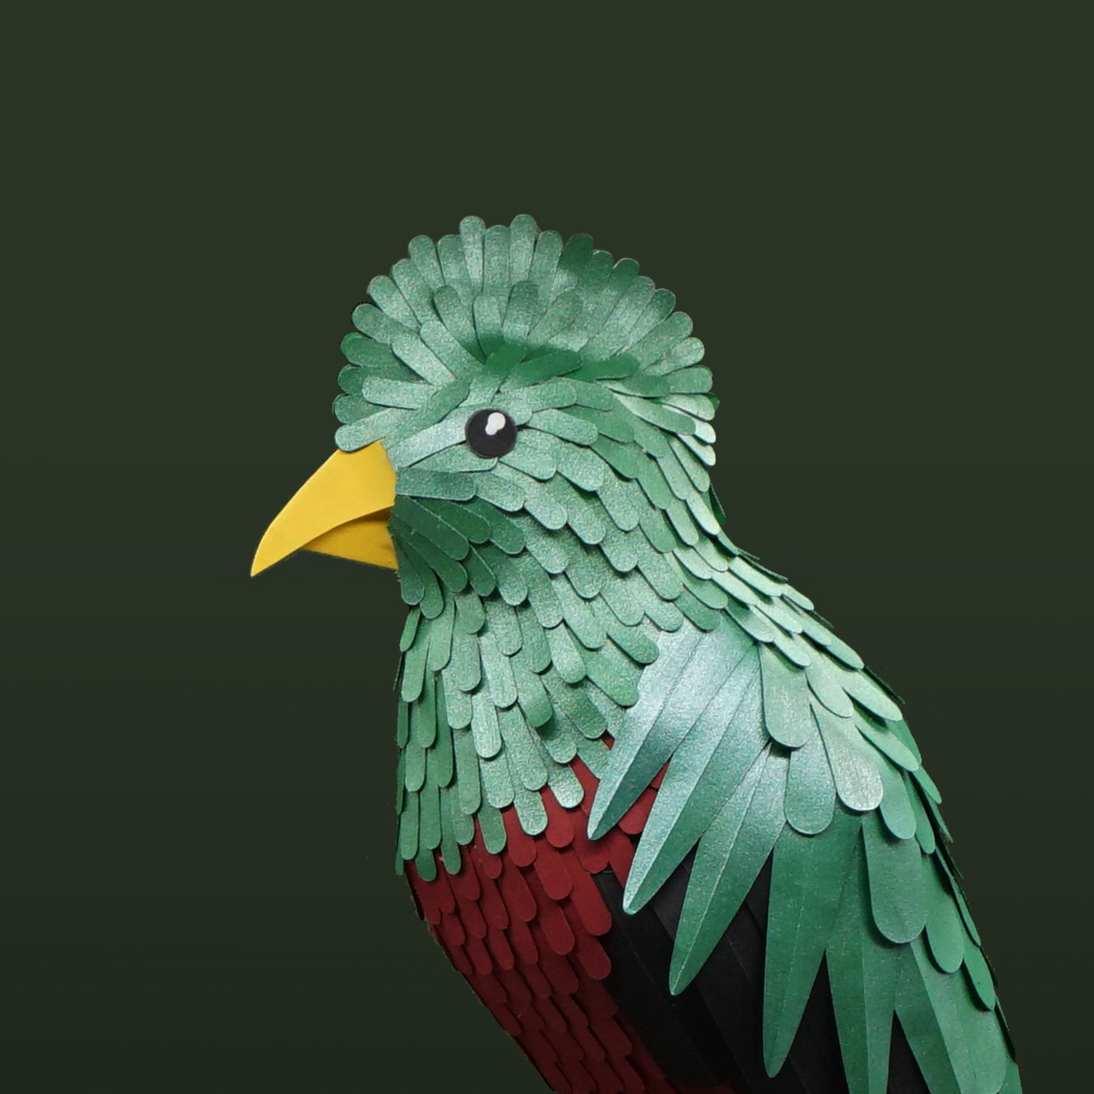 quetzal resplendissant